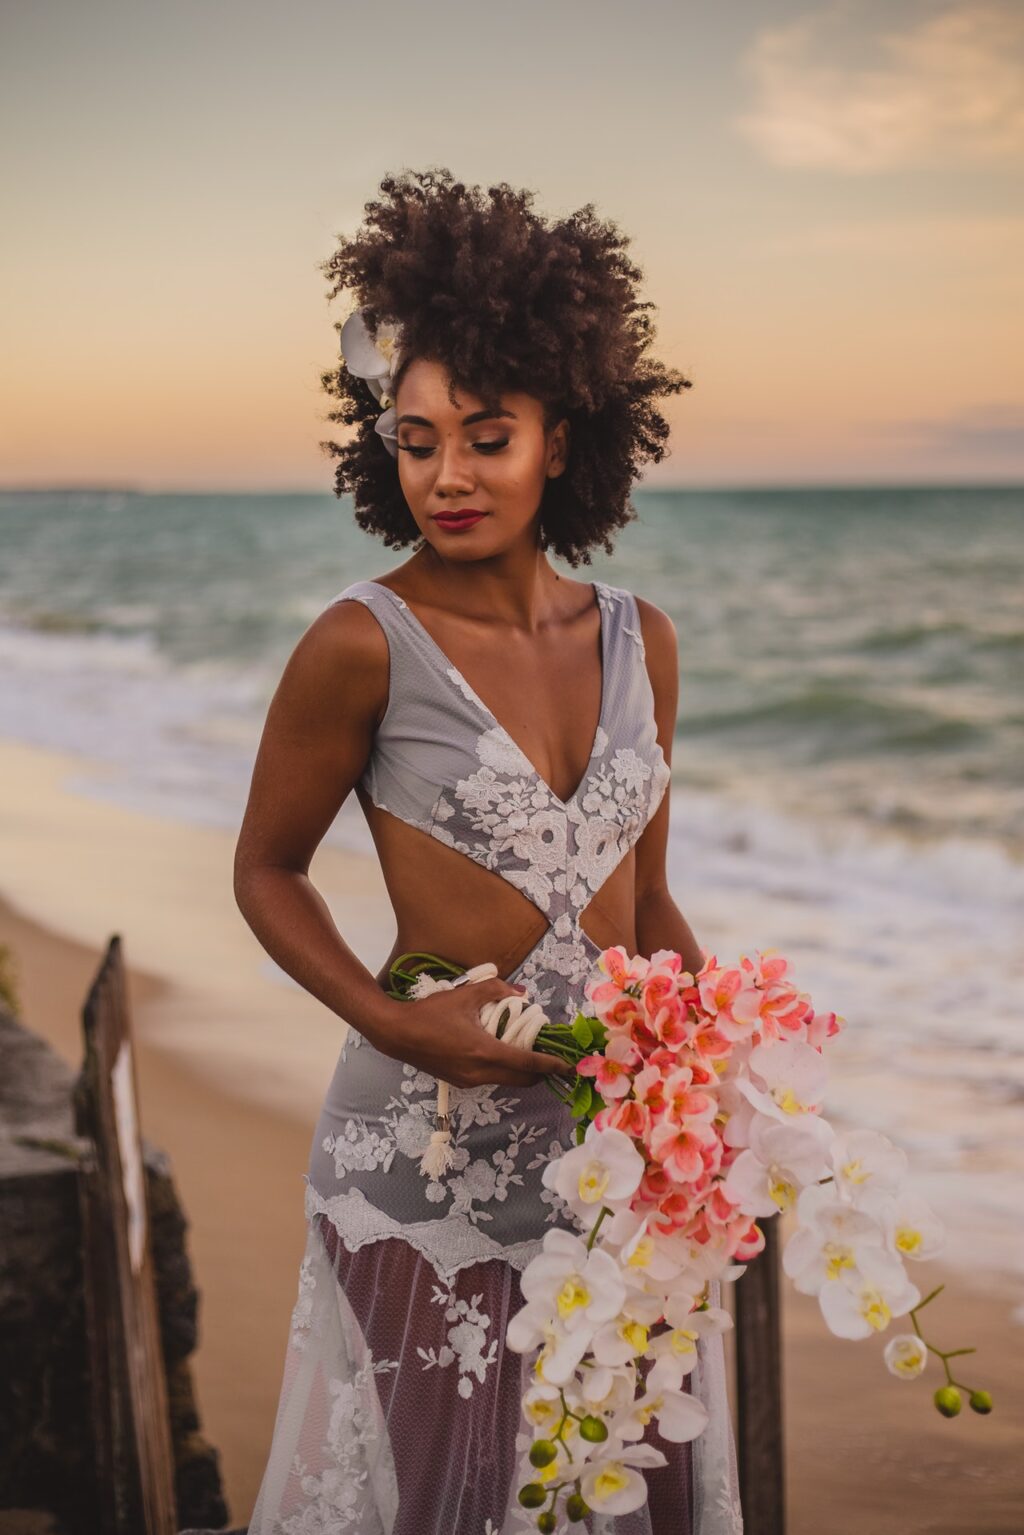 Afro wedding hairstyles stylish black bride with flower bouquet walking near ocean